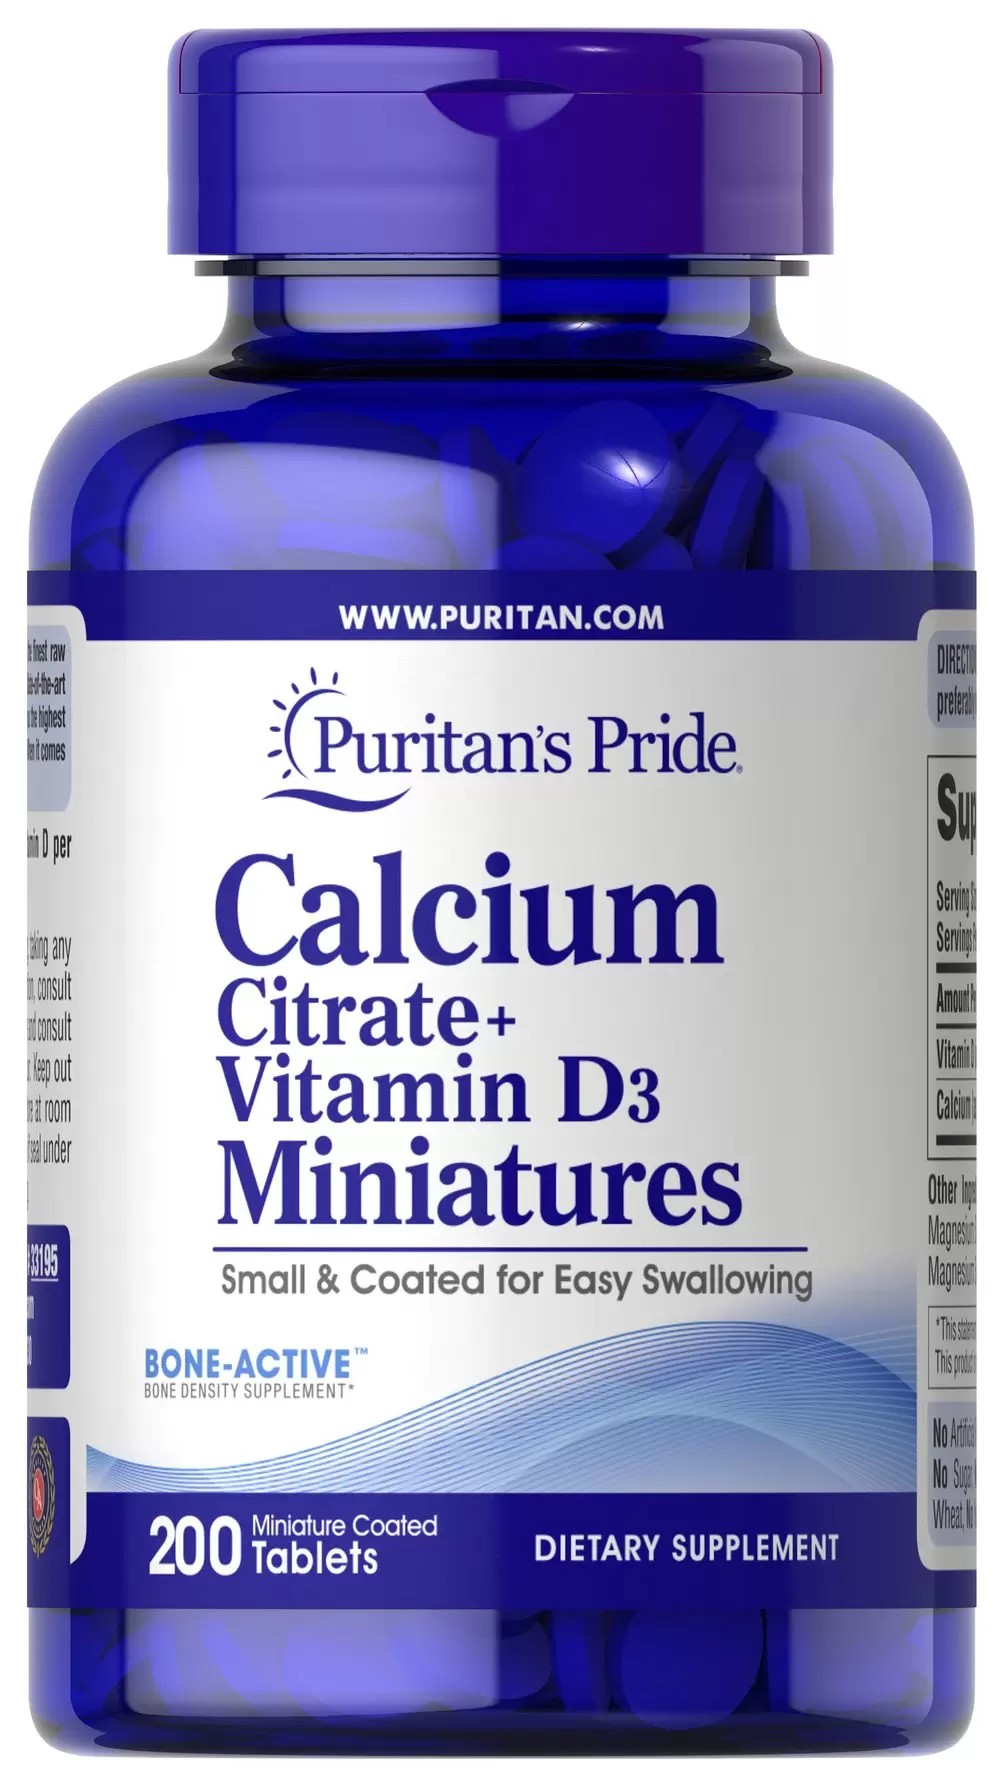 Citrato de calcio 400mg + 500ui de vitamina D3 x 200 comprimidos miniatura fáciles de tragar. 